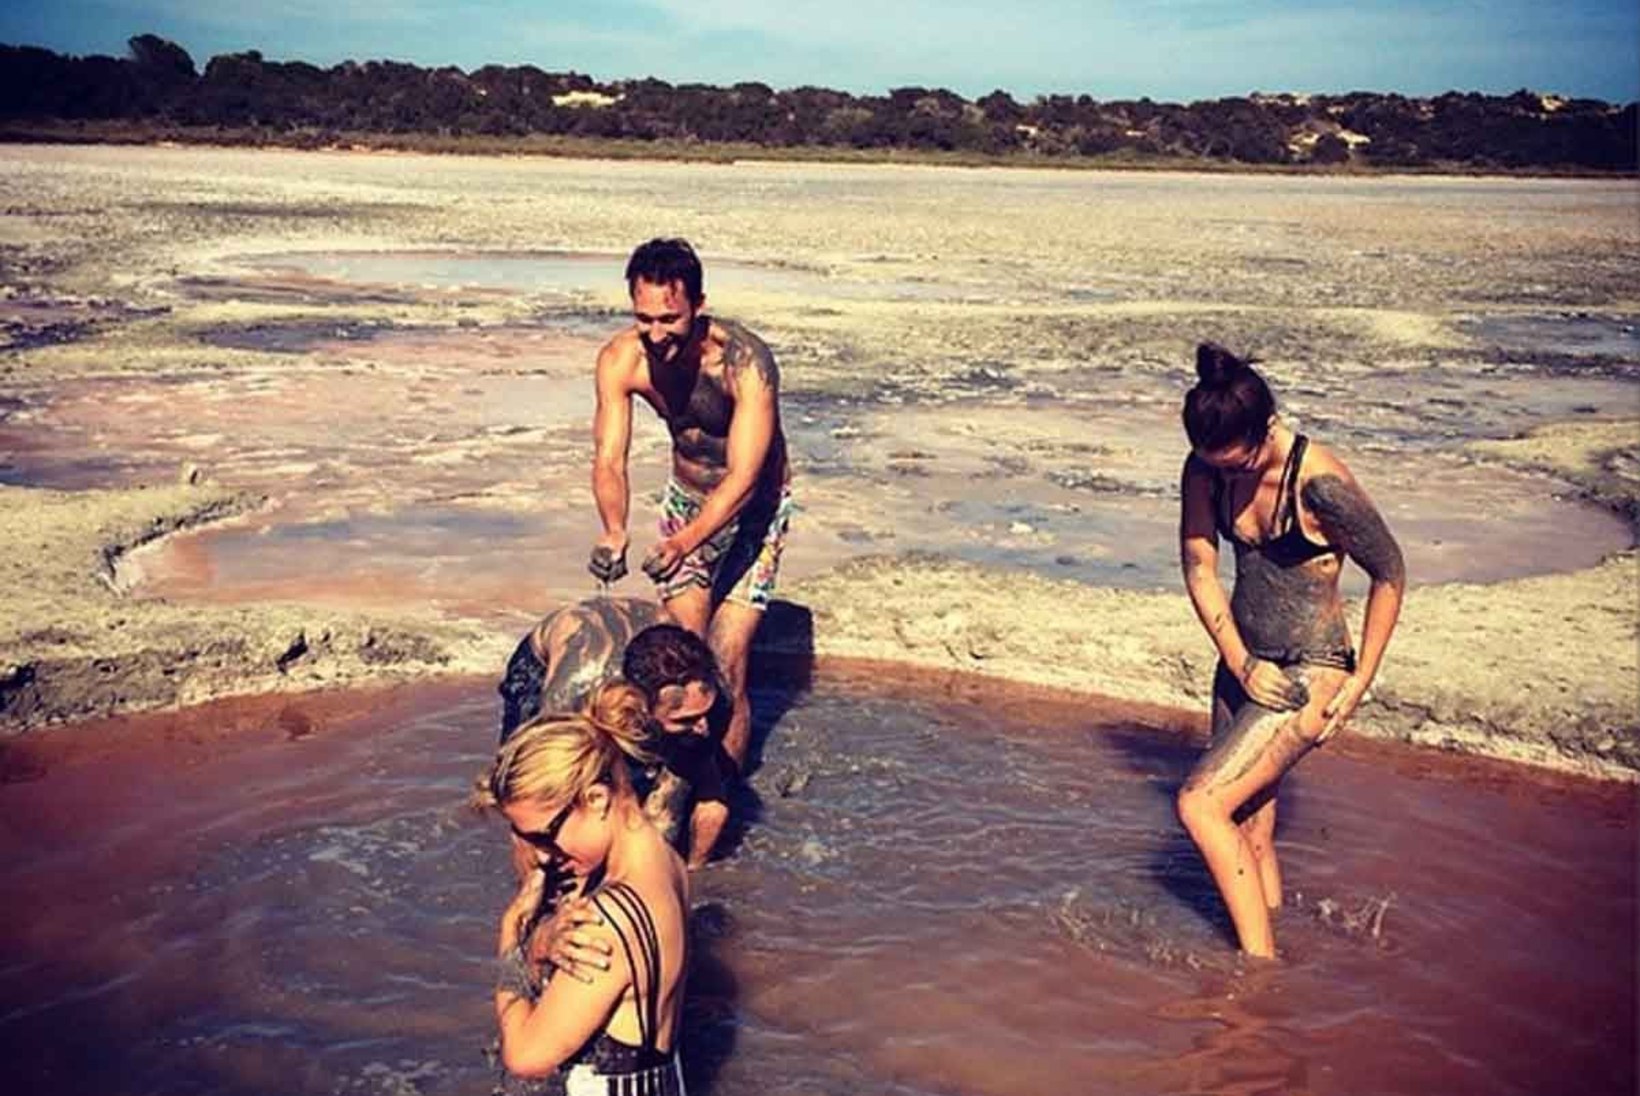 FOTOD: Paris Hilton hullas sõpradega mudas!